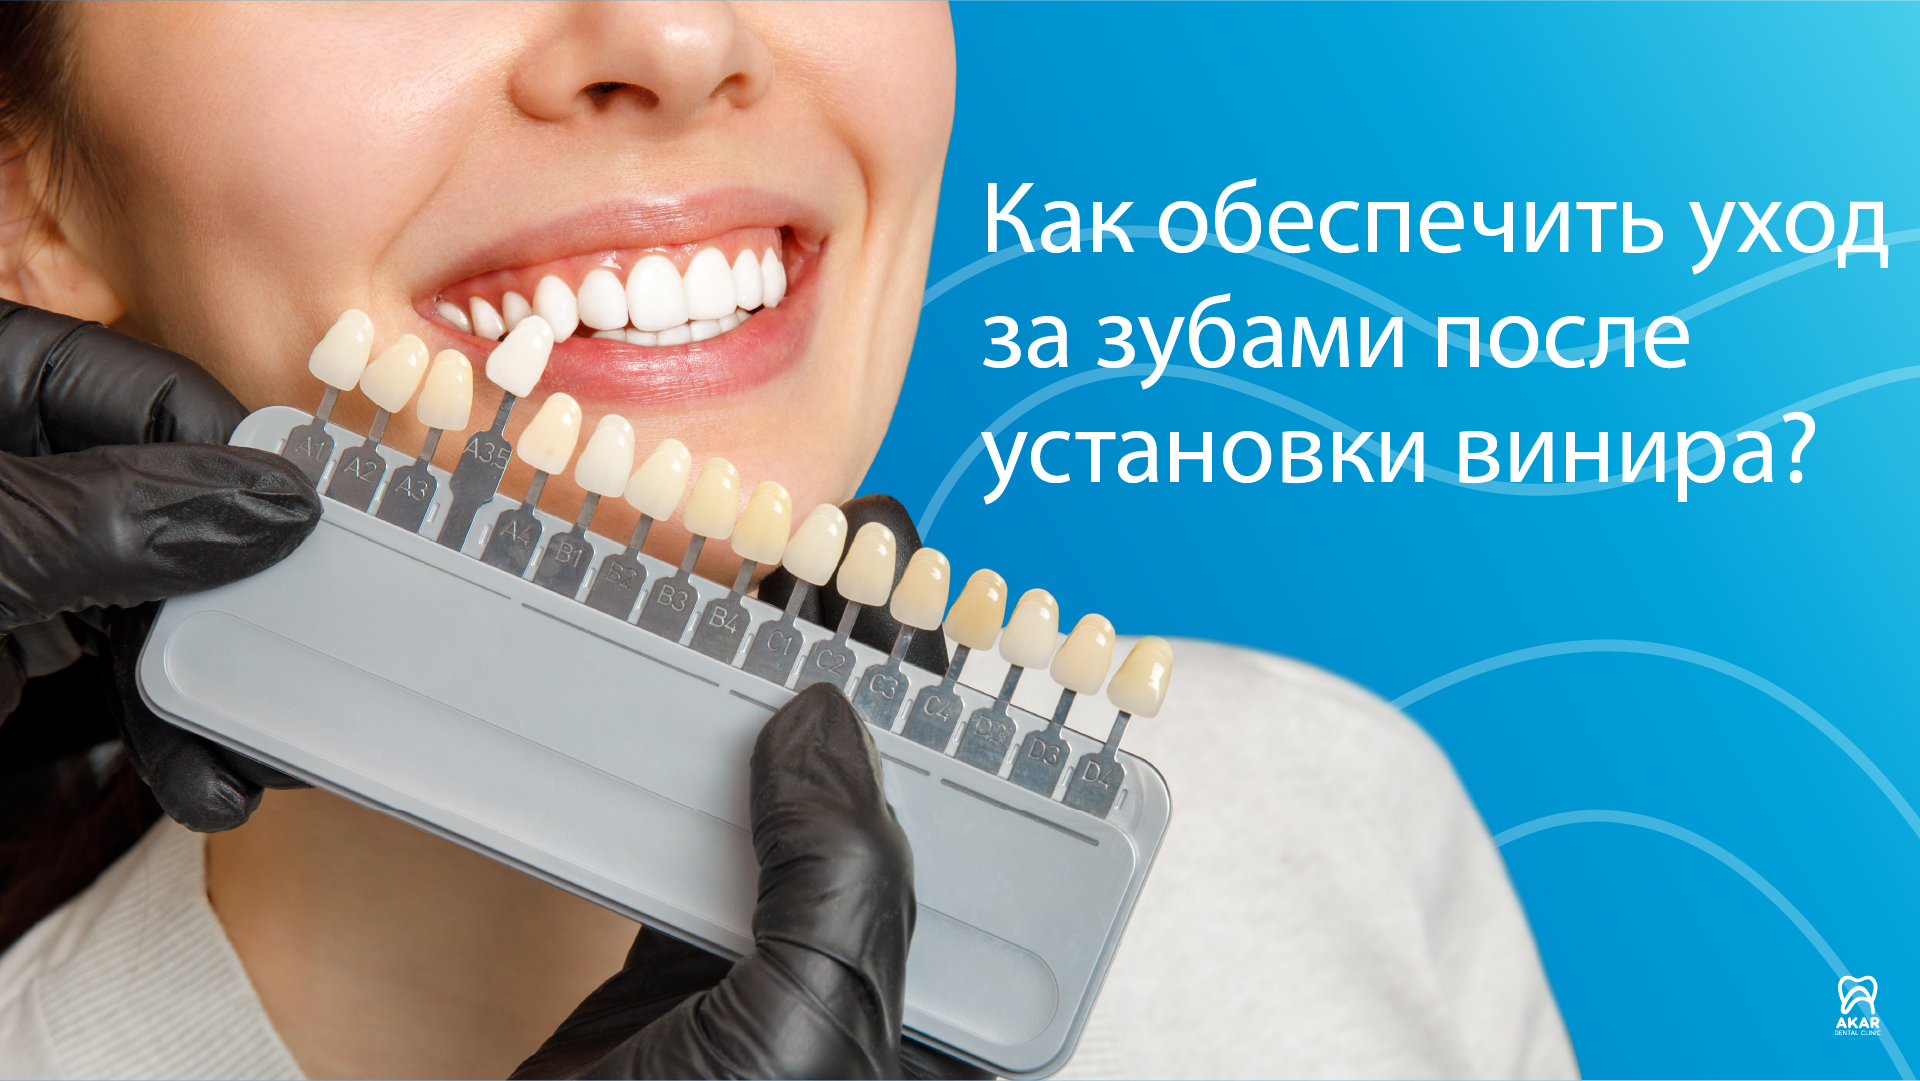 Как обеспечить уход за зубами после установки винира? - Анталия, Турция